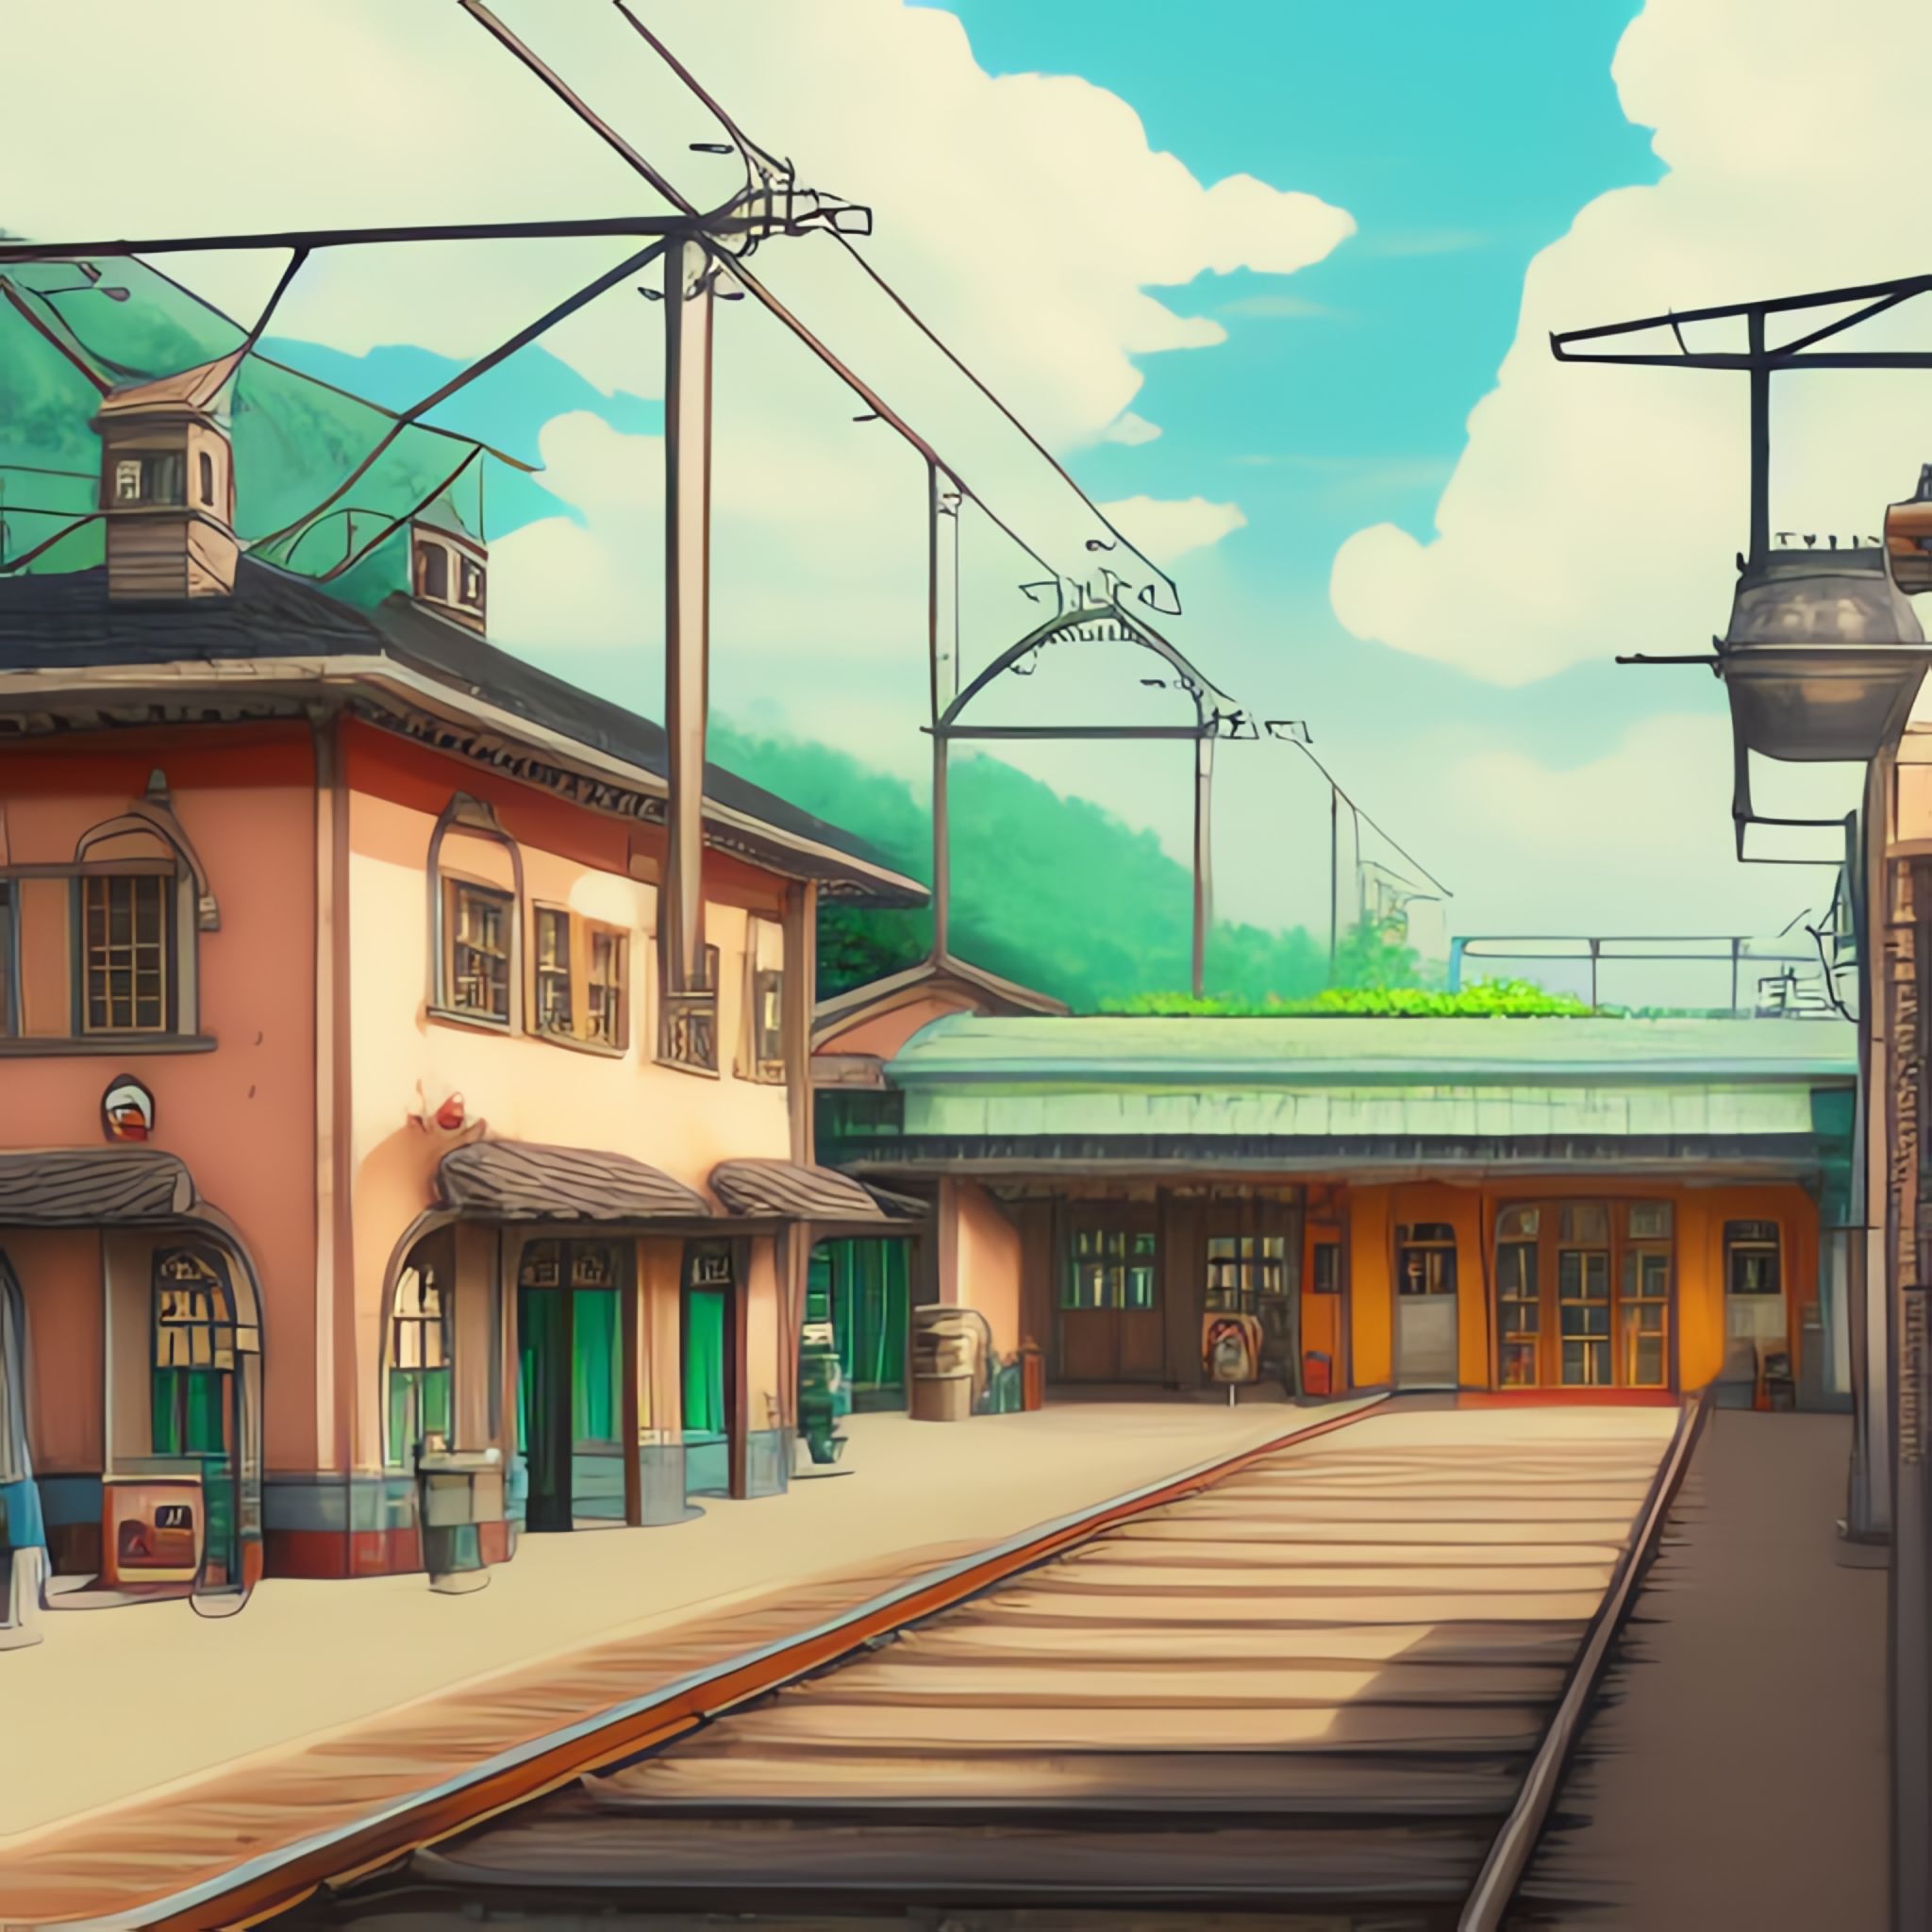 312581705-Vintage-train-station-in-Italian-village-Studio-Ghibli-hayao-miyazaki-art-style-hyper-real-nxop